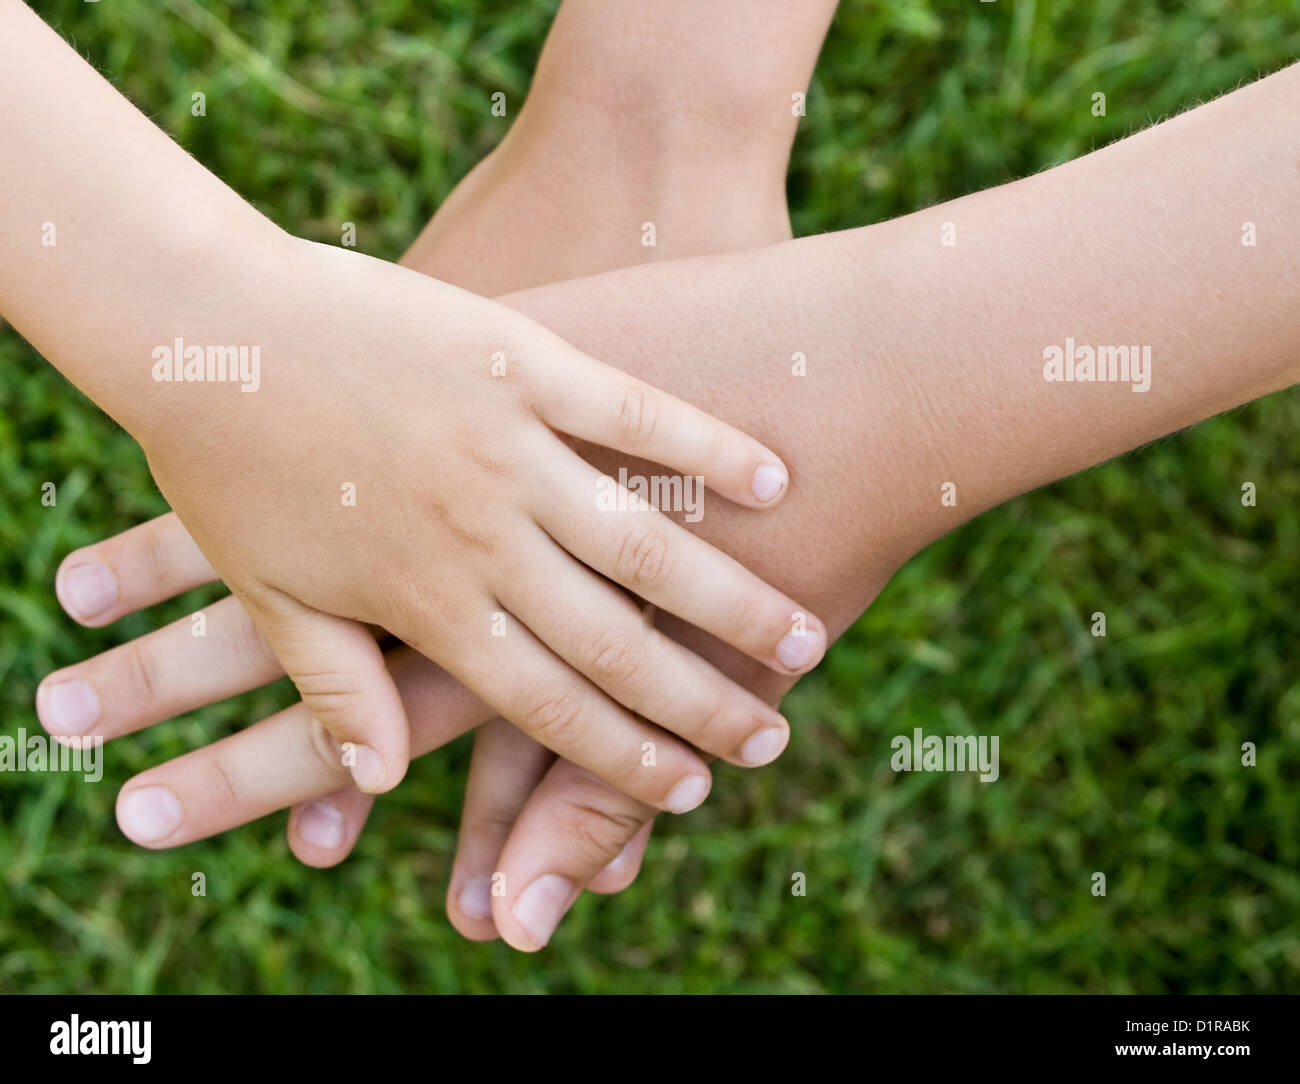 Children hand together over blurred (camera setup) grass background. Stock Photo